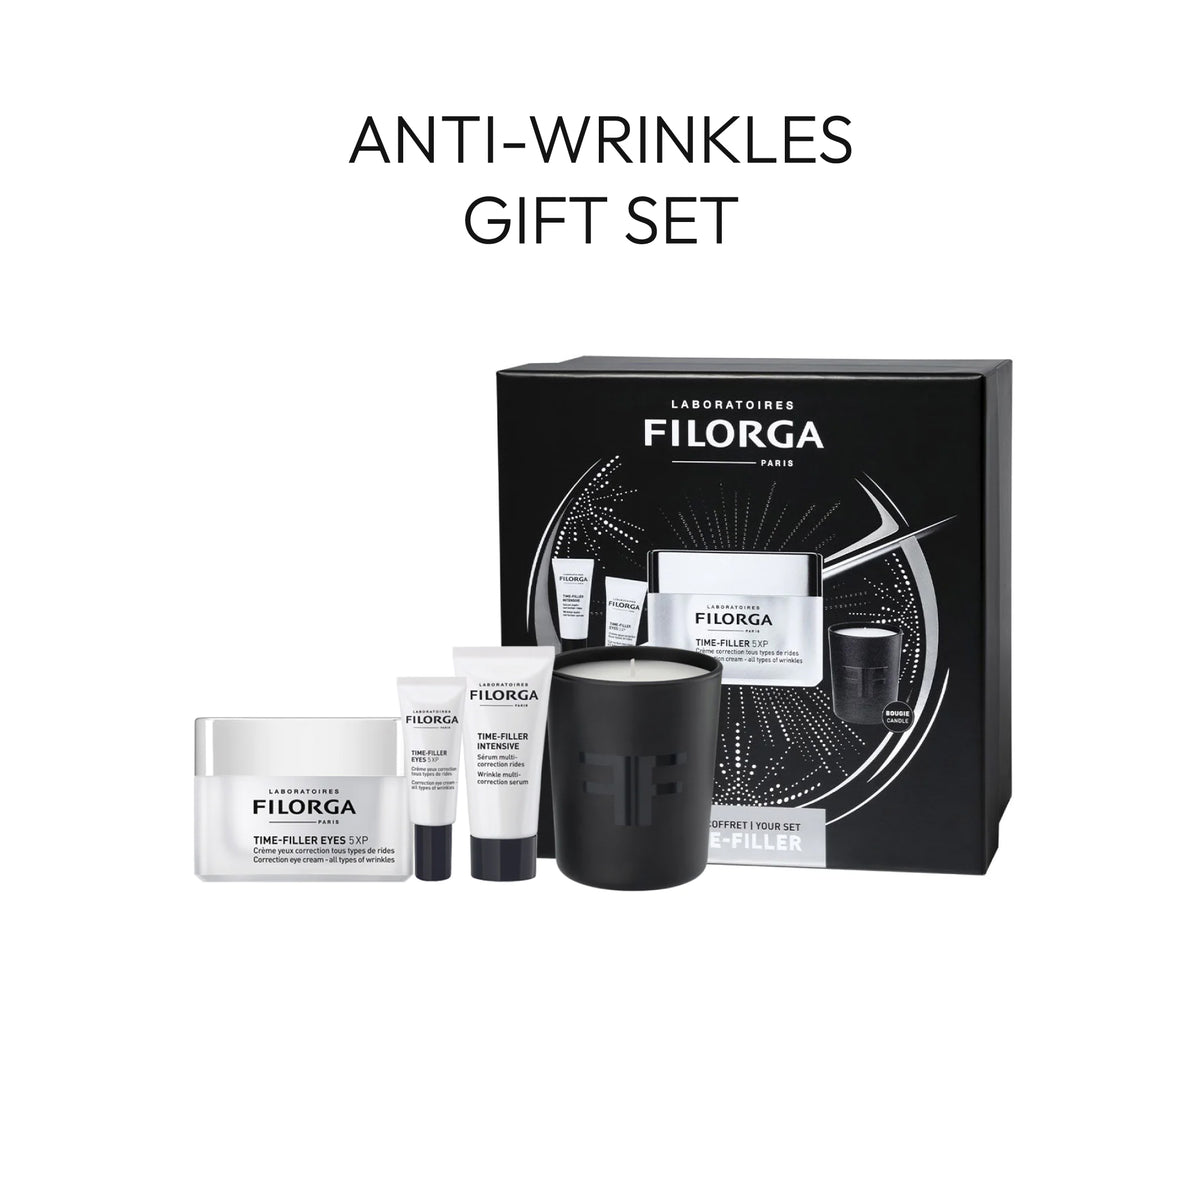 Anti-Wrinkles Gift Set